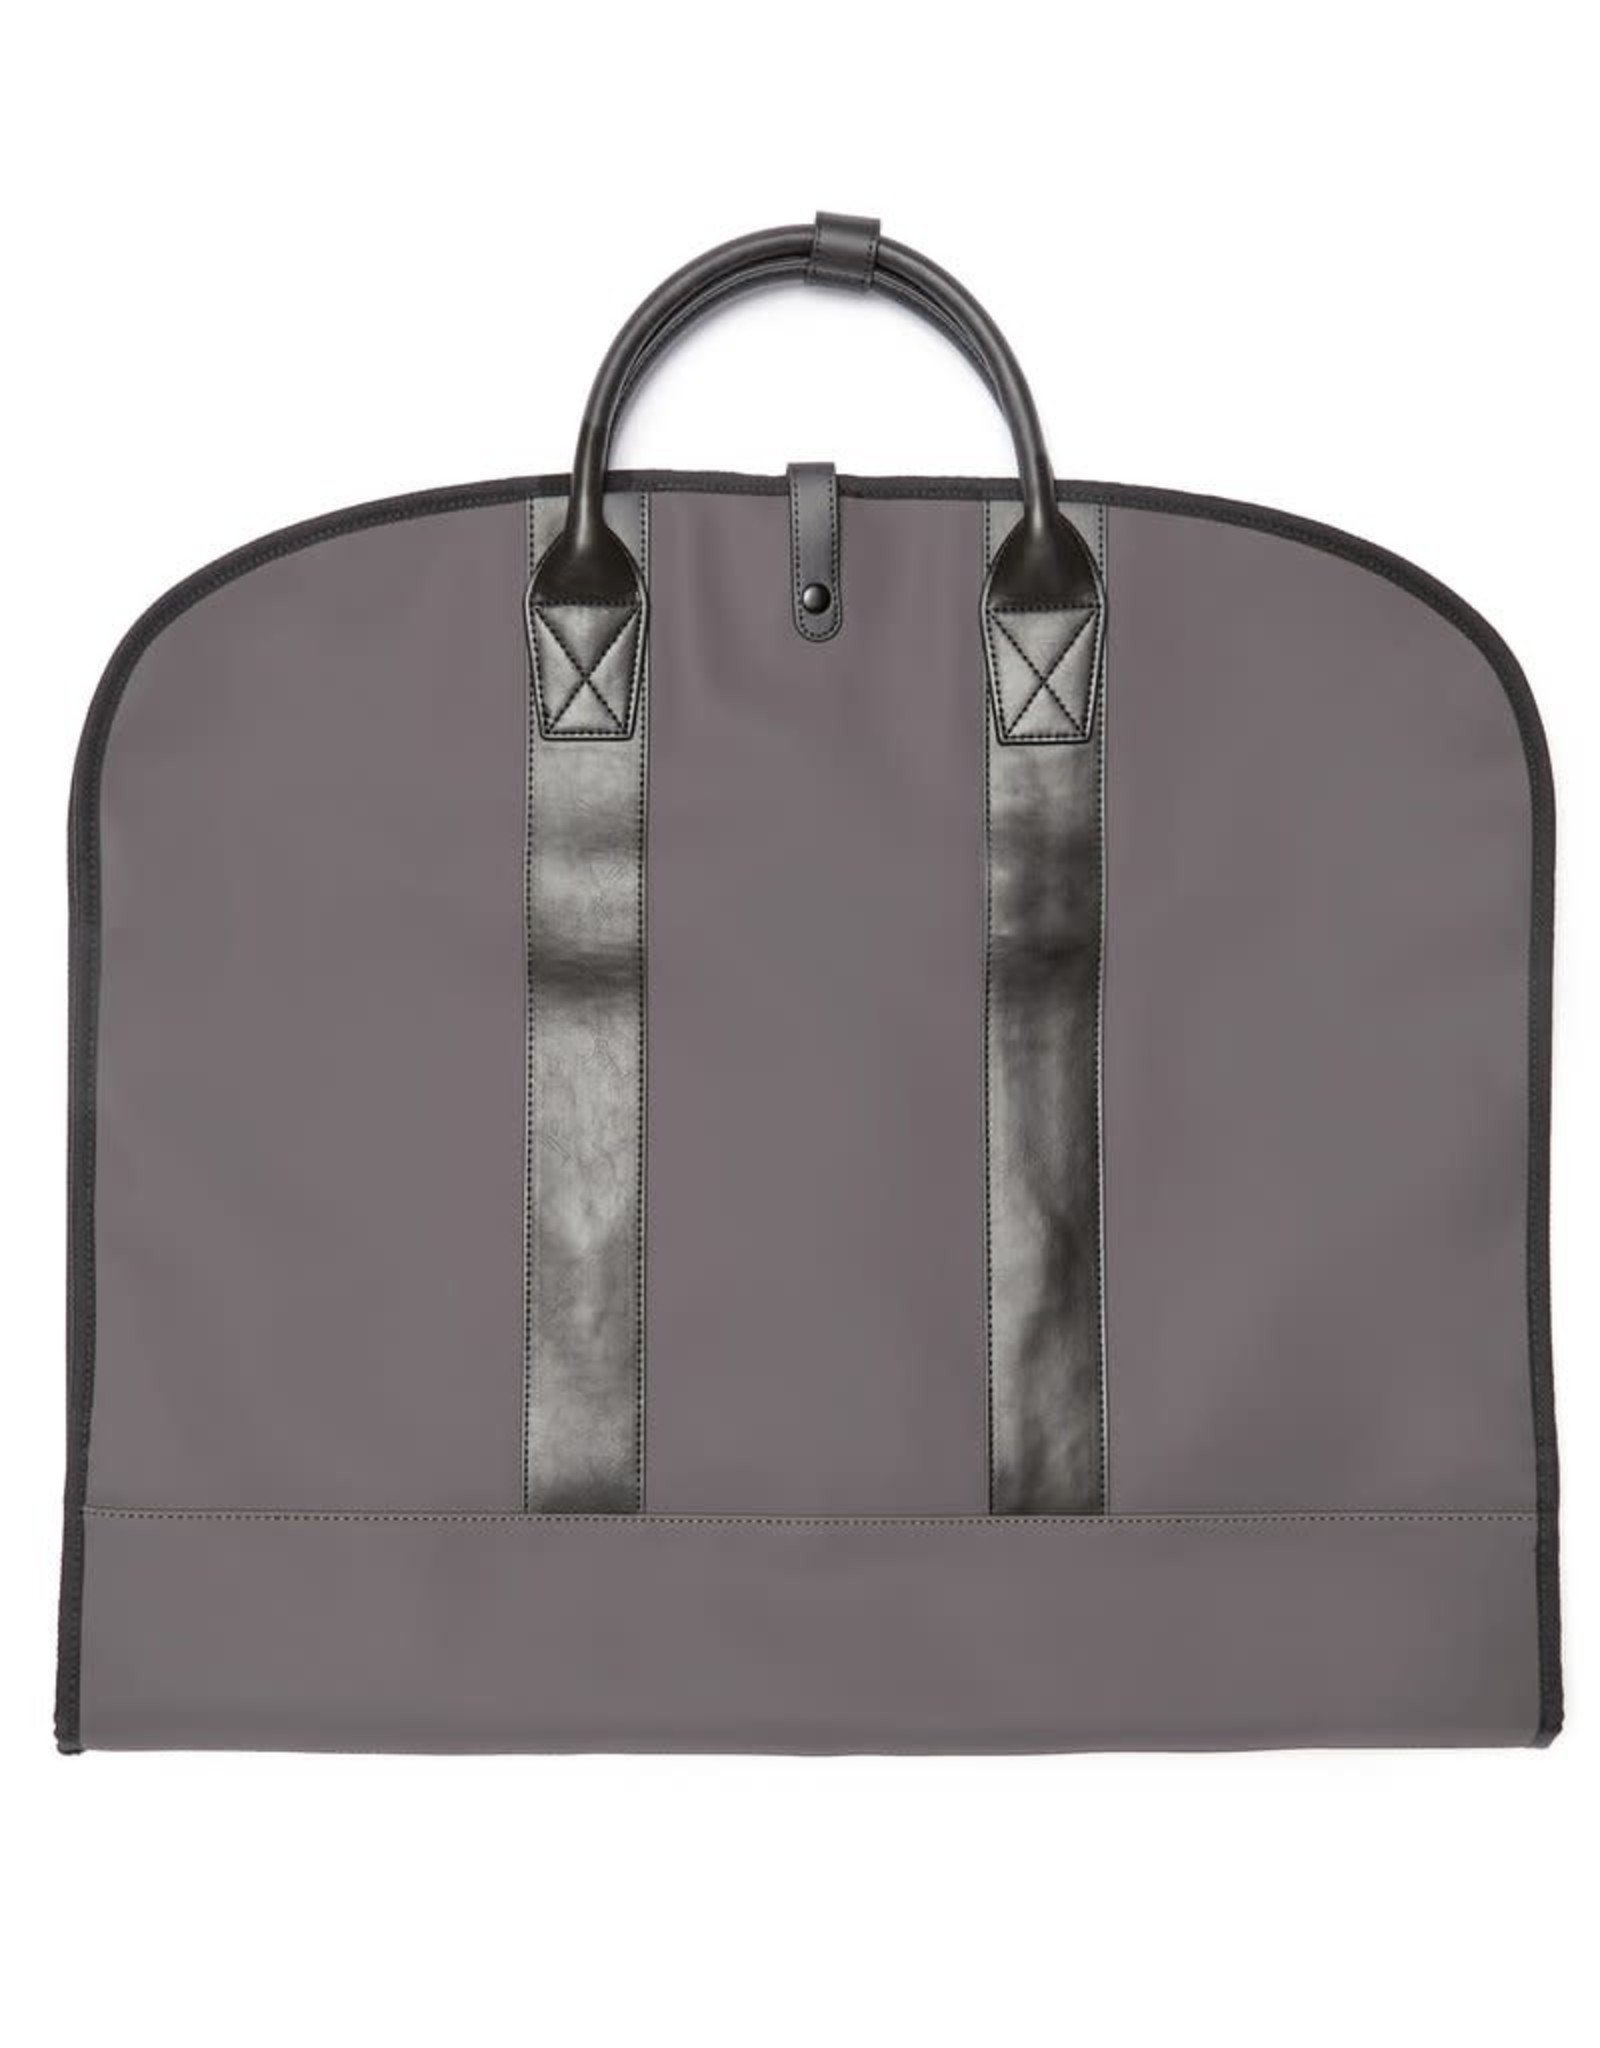 Brouk and Co. Hudson Garment Bag